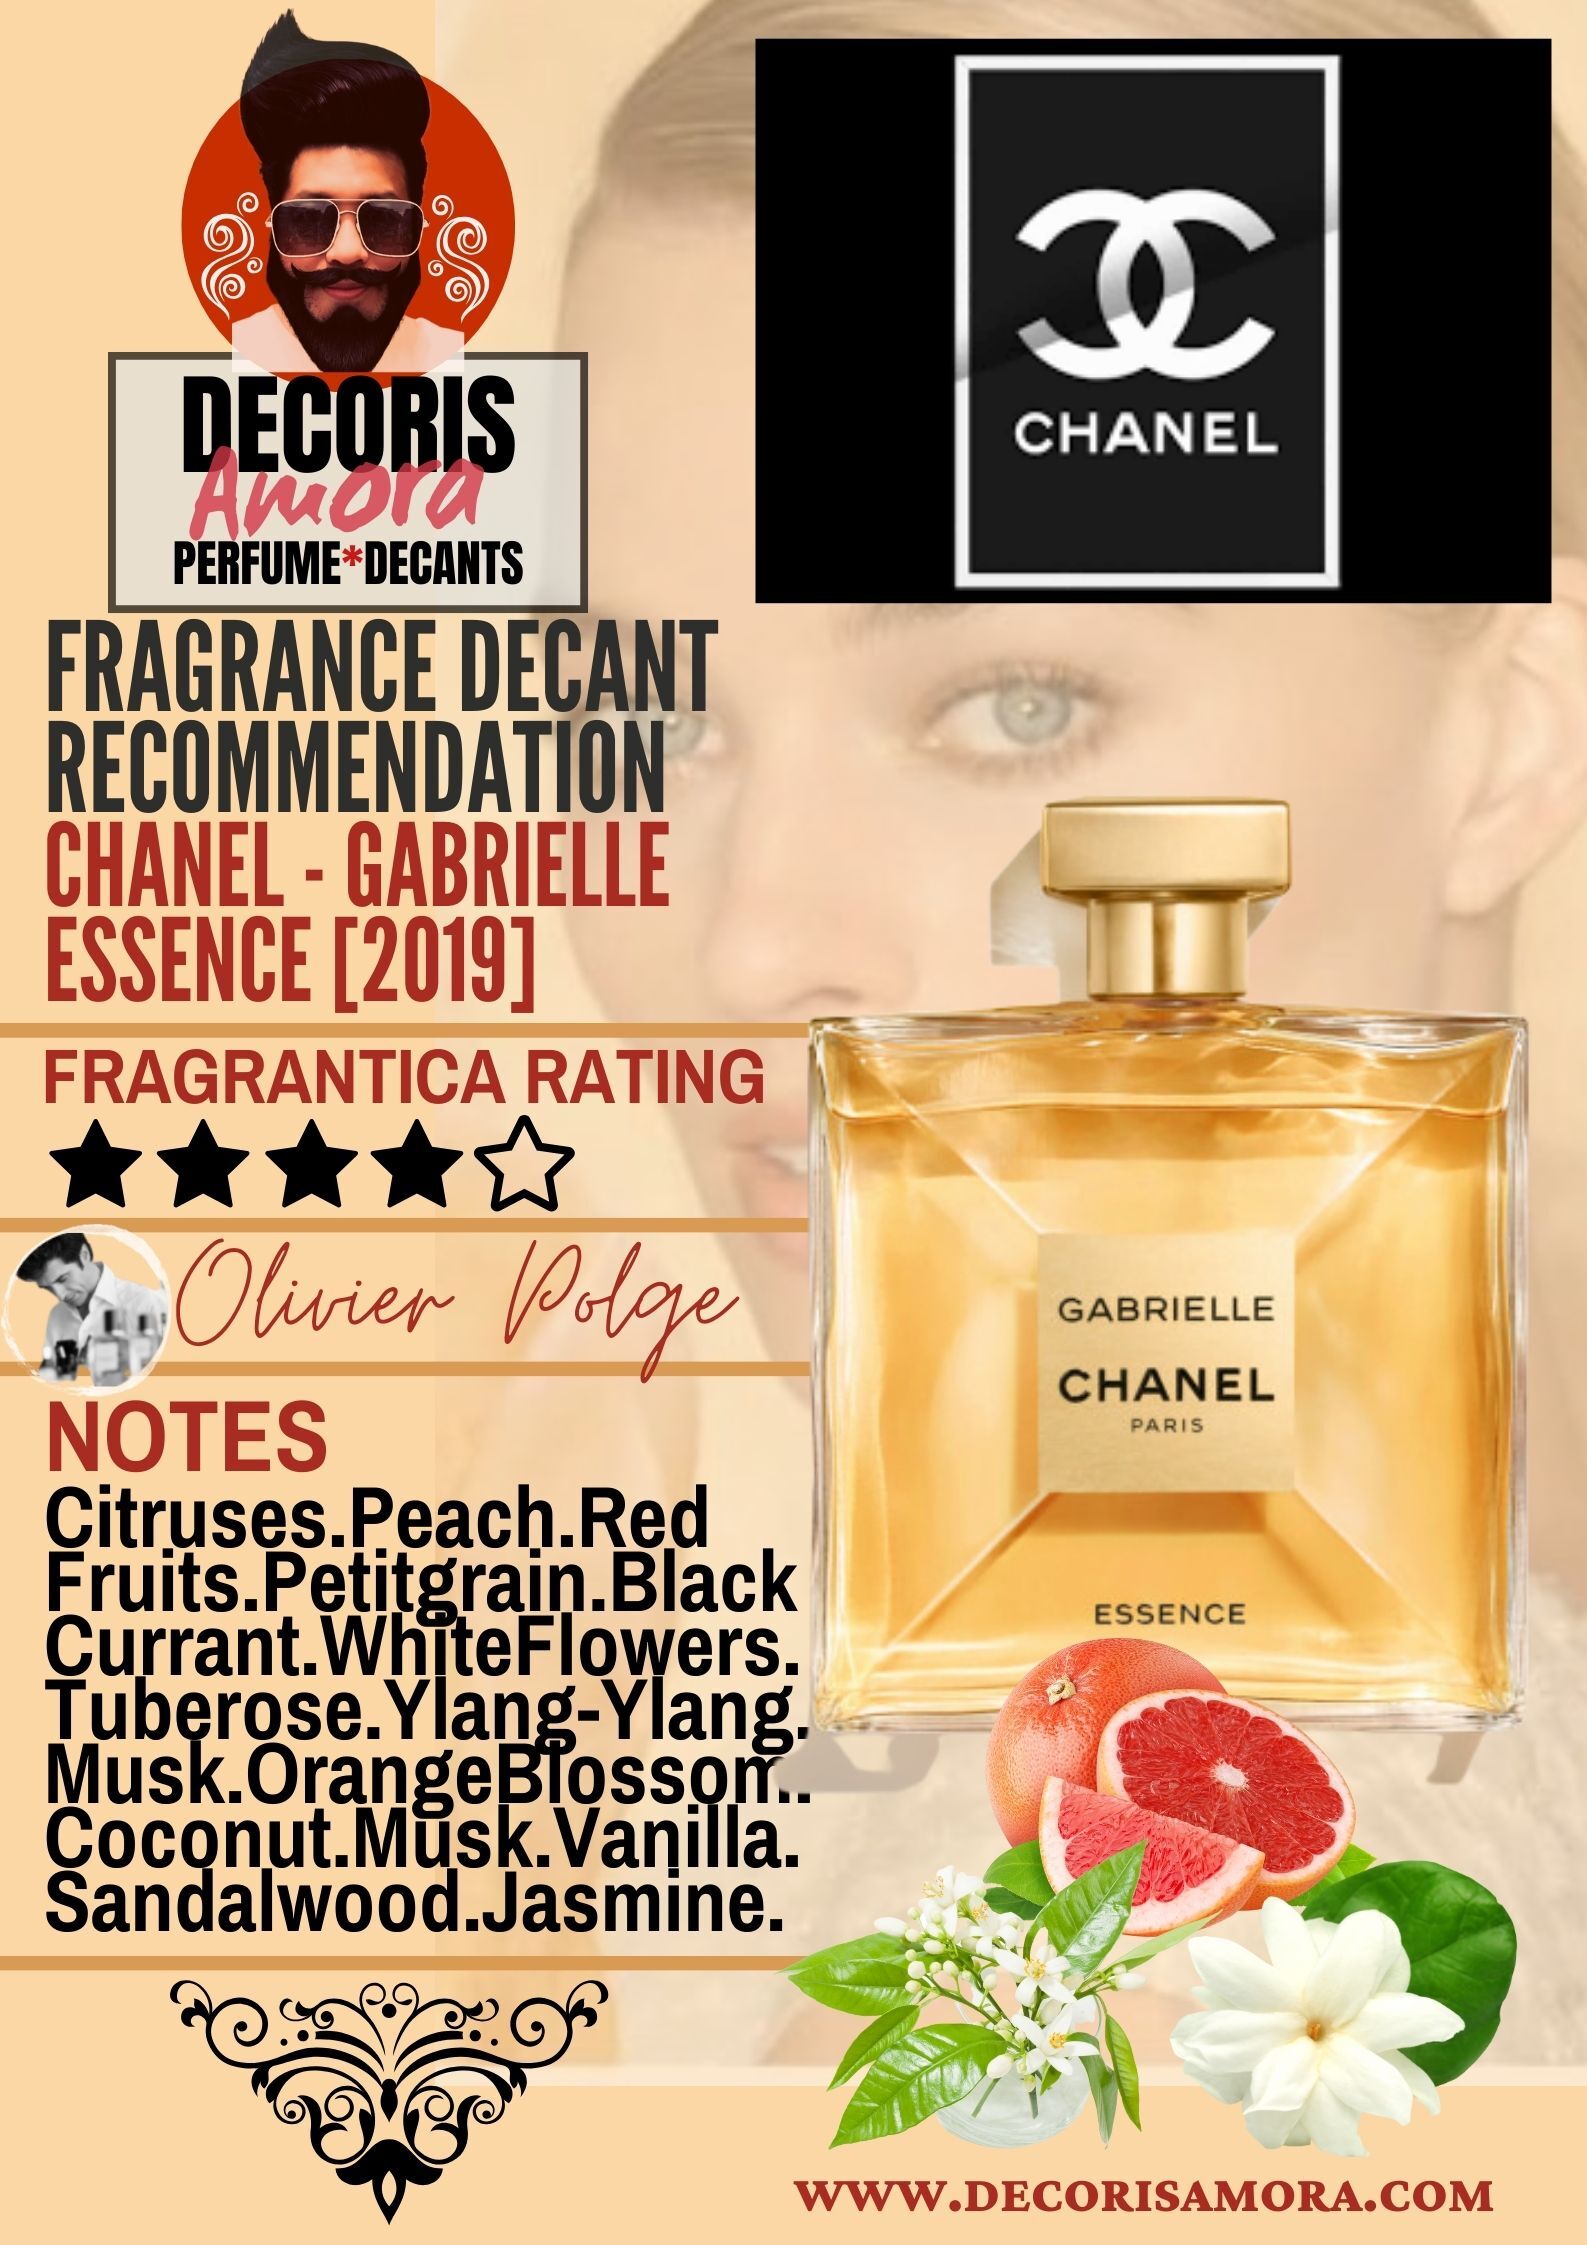 Chanel Gabrielle Essense Perfume Decant – Decoris Amora Perfume Decant